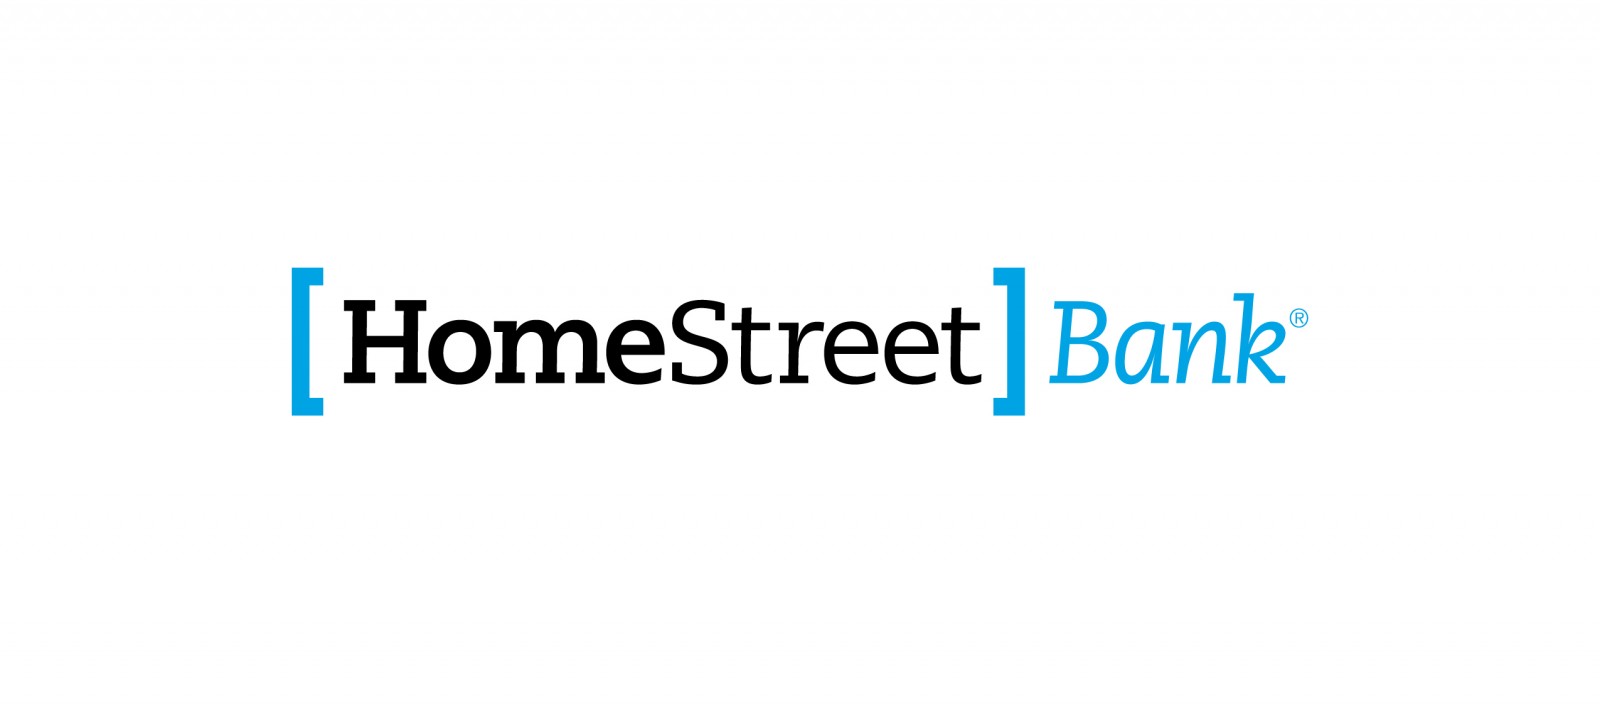 Homestreet Bank Logo